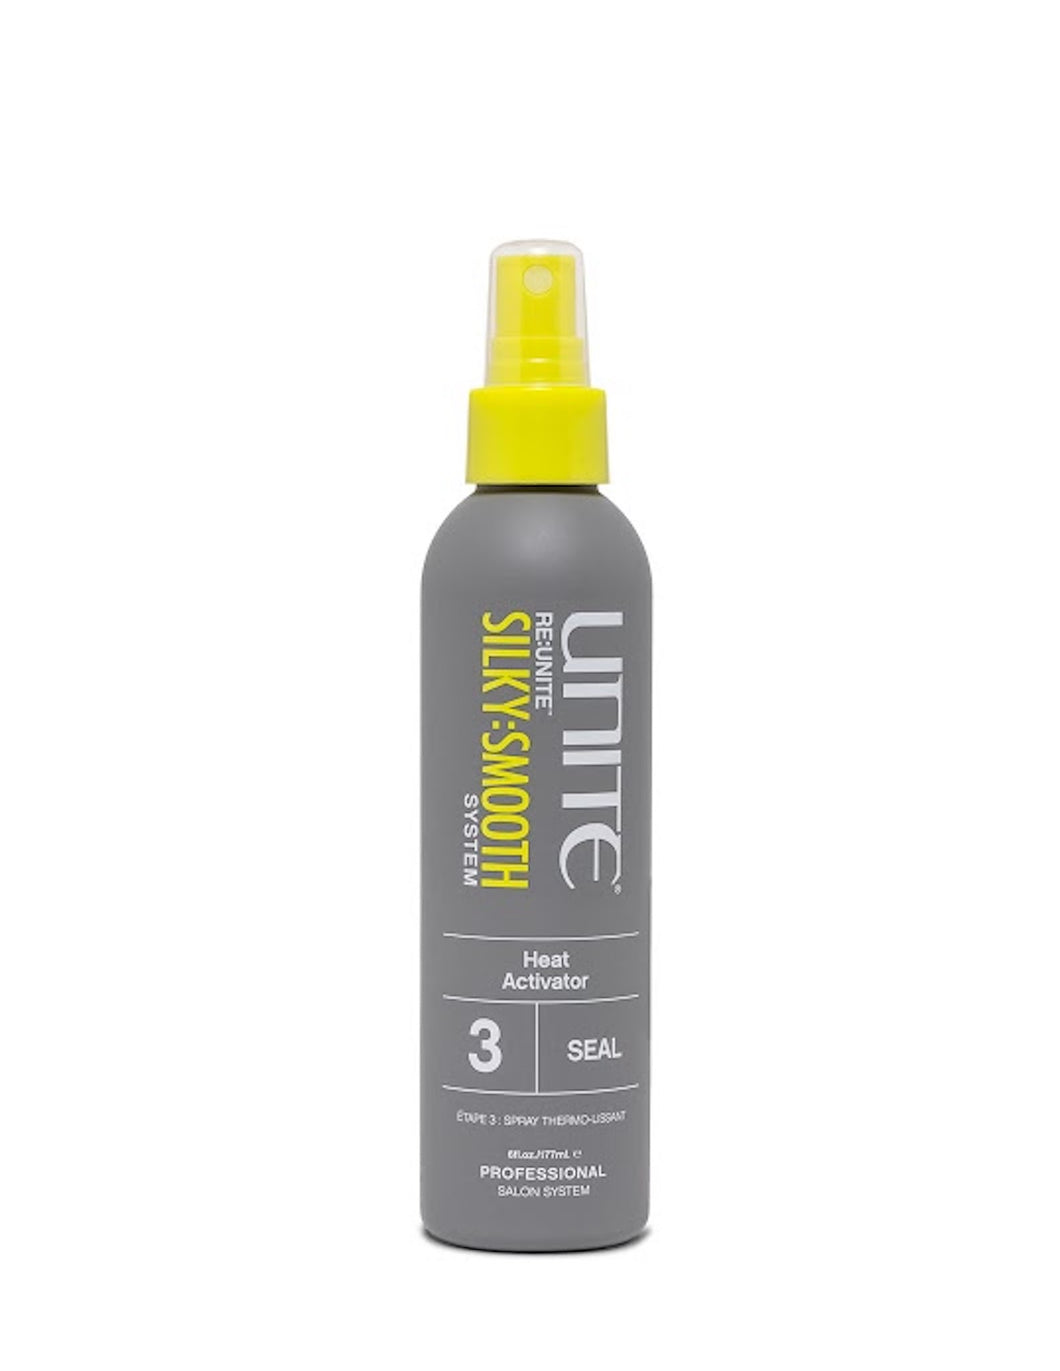 Unite - SILKY:SMOOTH Heat Activator grey bottle with yellow non-aerosol spray top